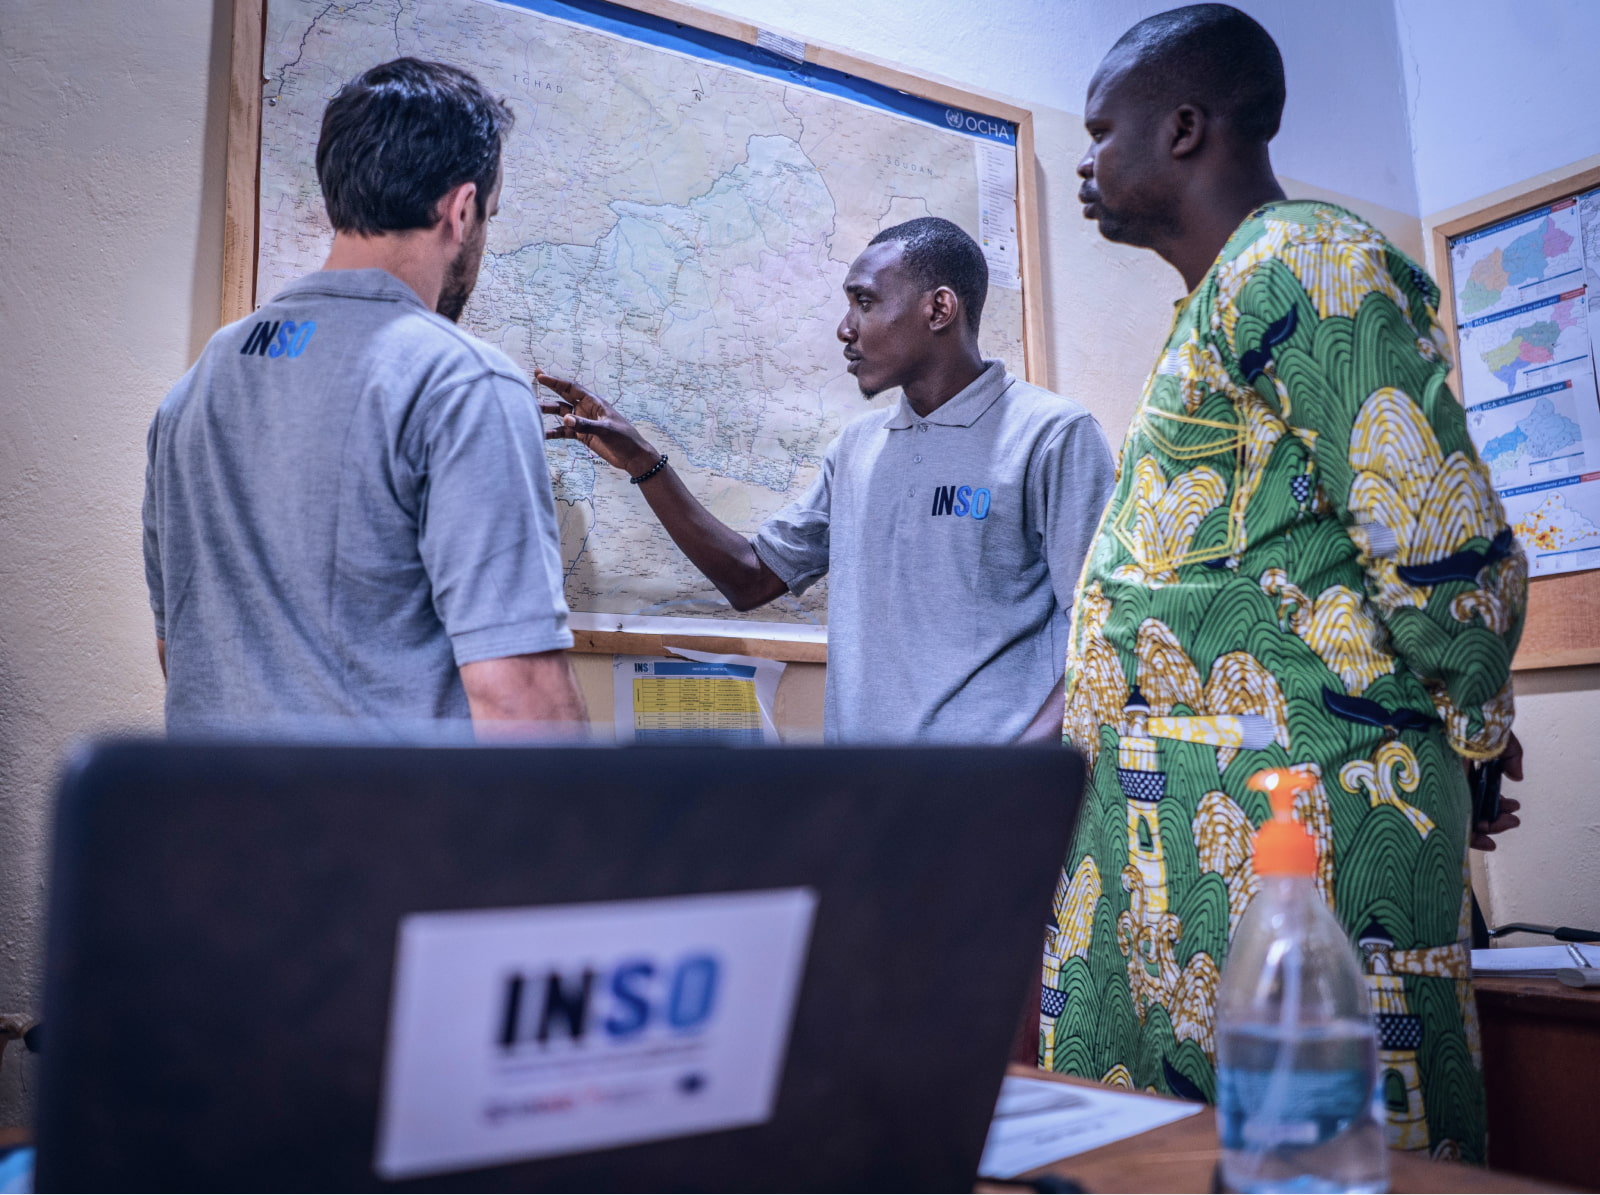 INSO staff members in Bangui, CAR discuss incidents using a map. Credit: C. Di Roma/INSO